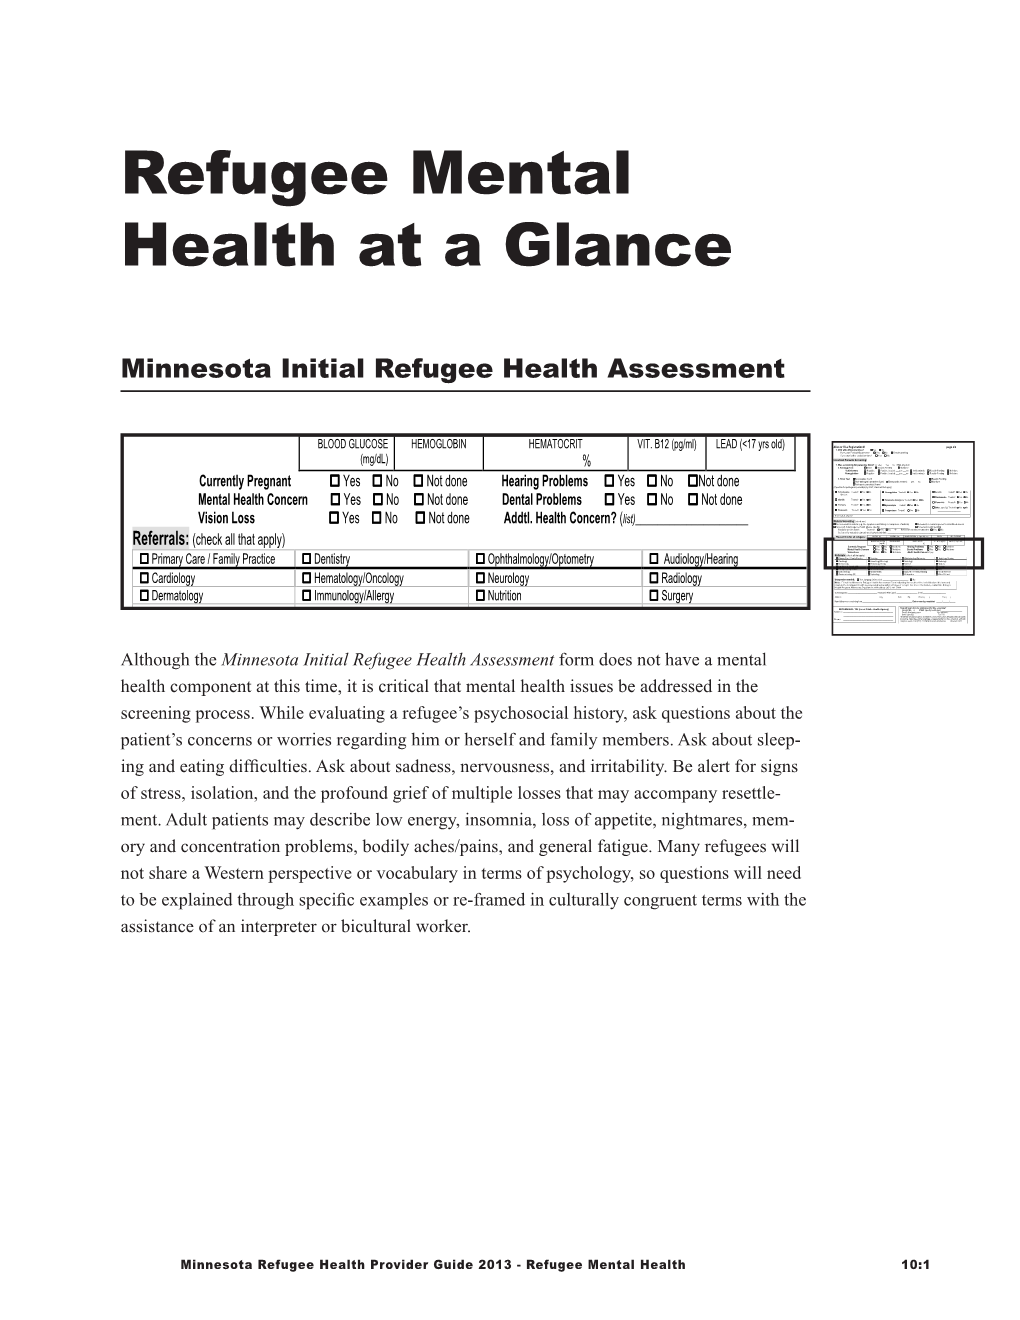 Refugee Mental Health 10:1 Key Resources